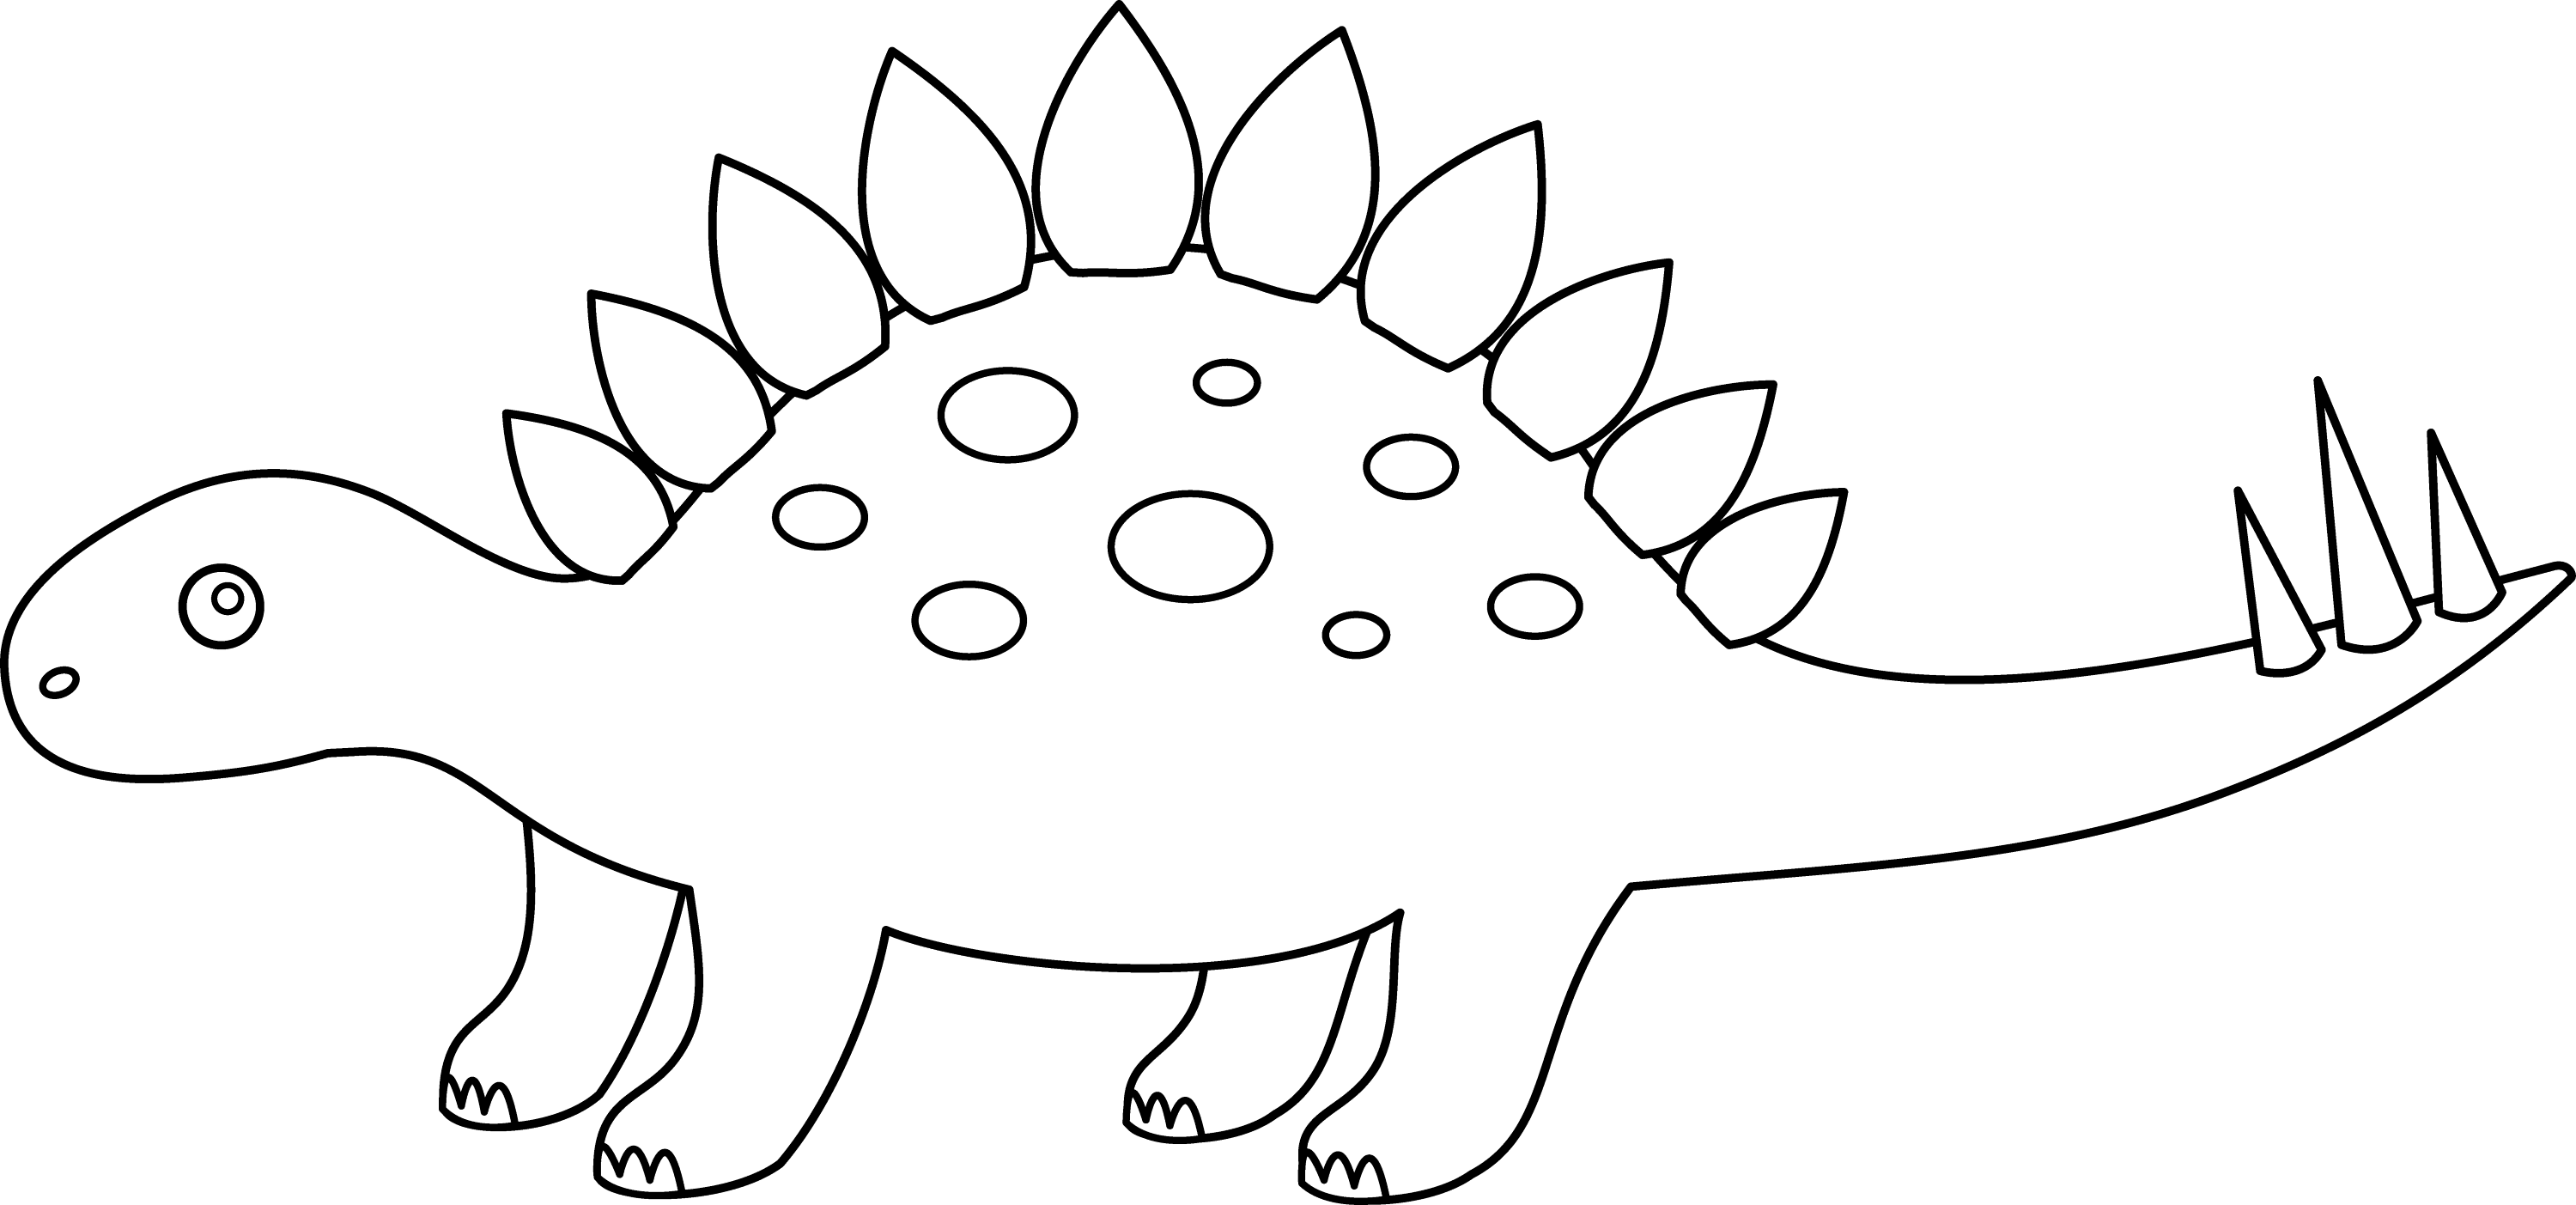 stegosaurus-coloring-page-free-clip-art